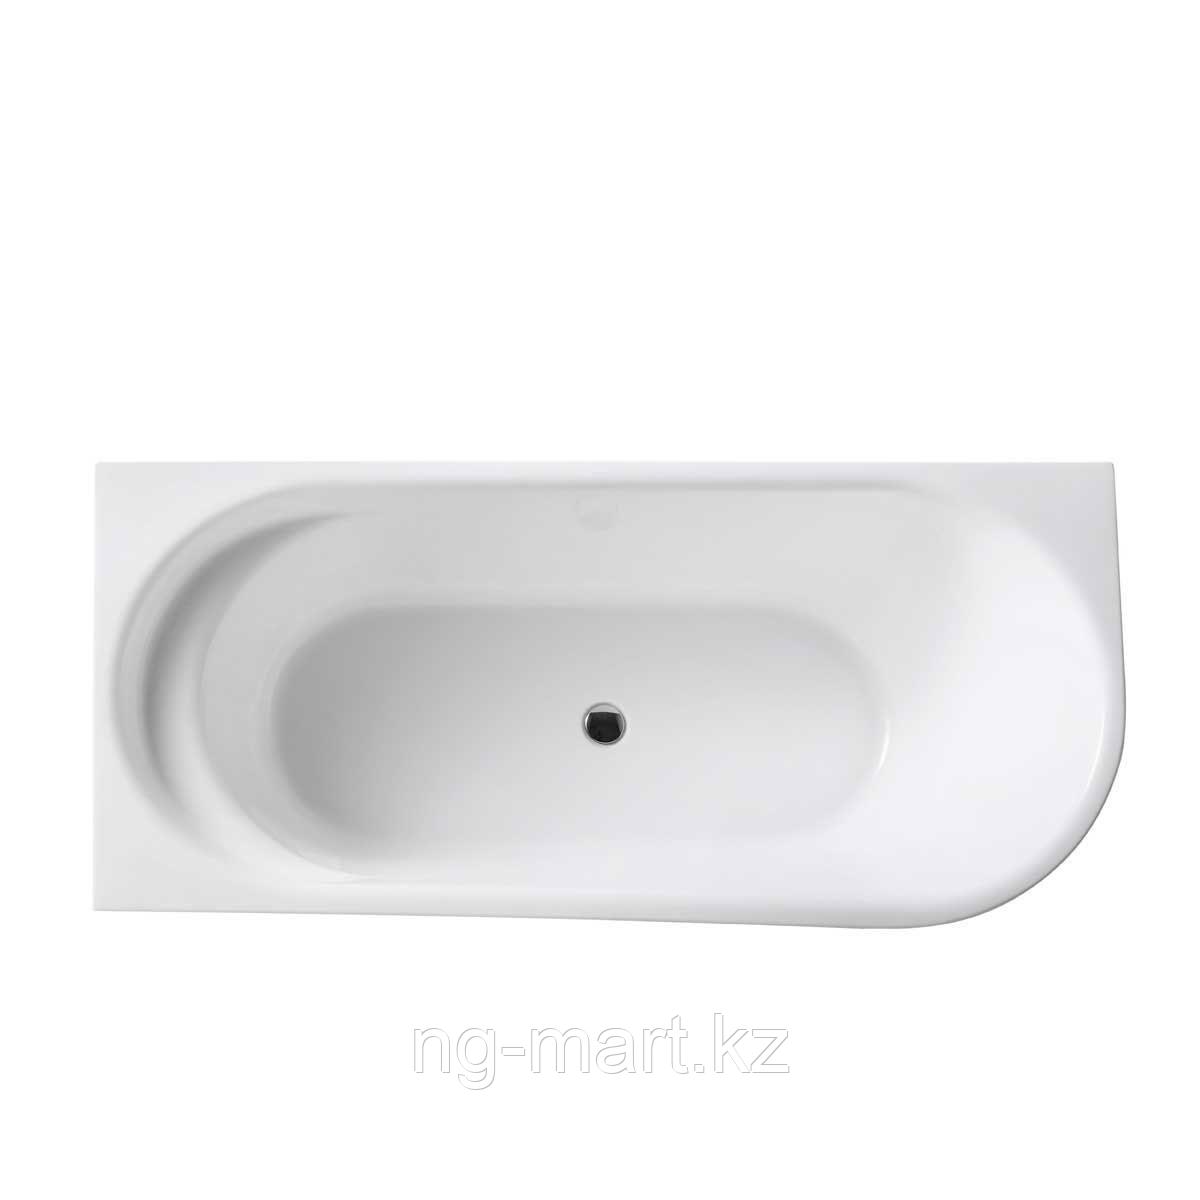 Ванна акриловая Vincea VBT-301-1500L, 1500*780*600, цвет белый, левая